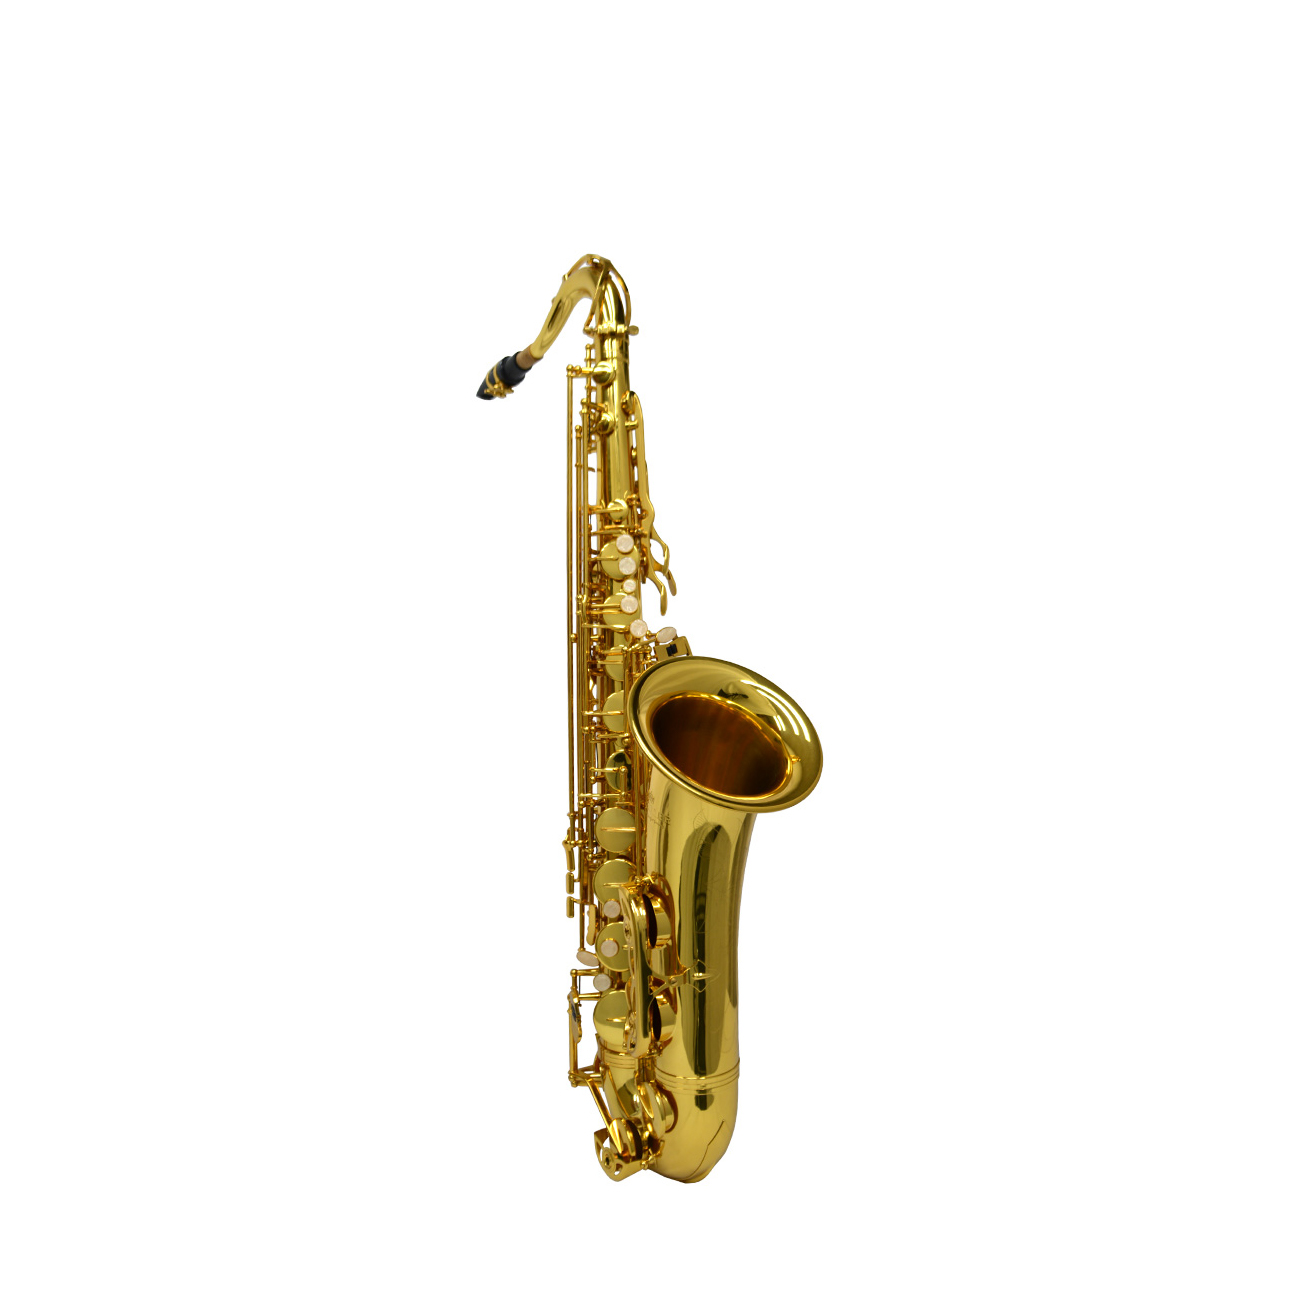 American Heritage 400 Tenor Saxophone - Gold Knox